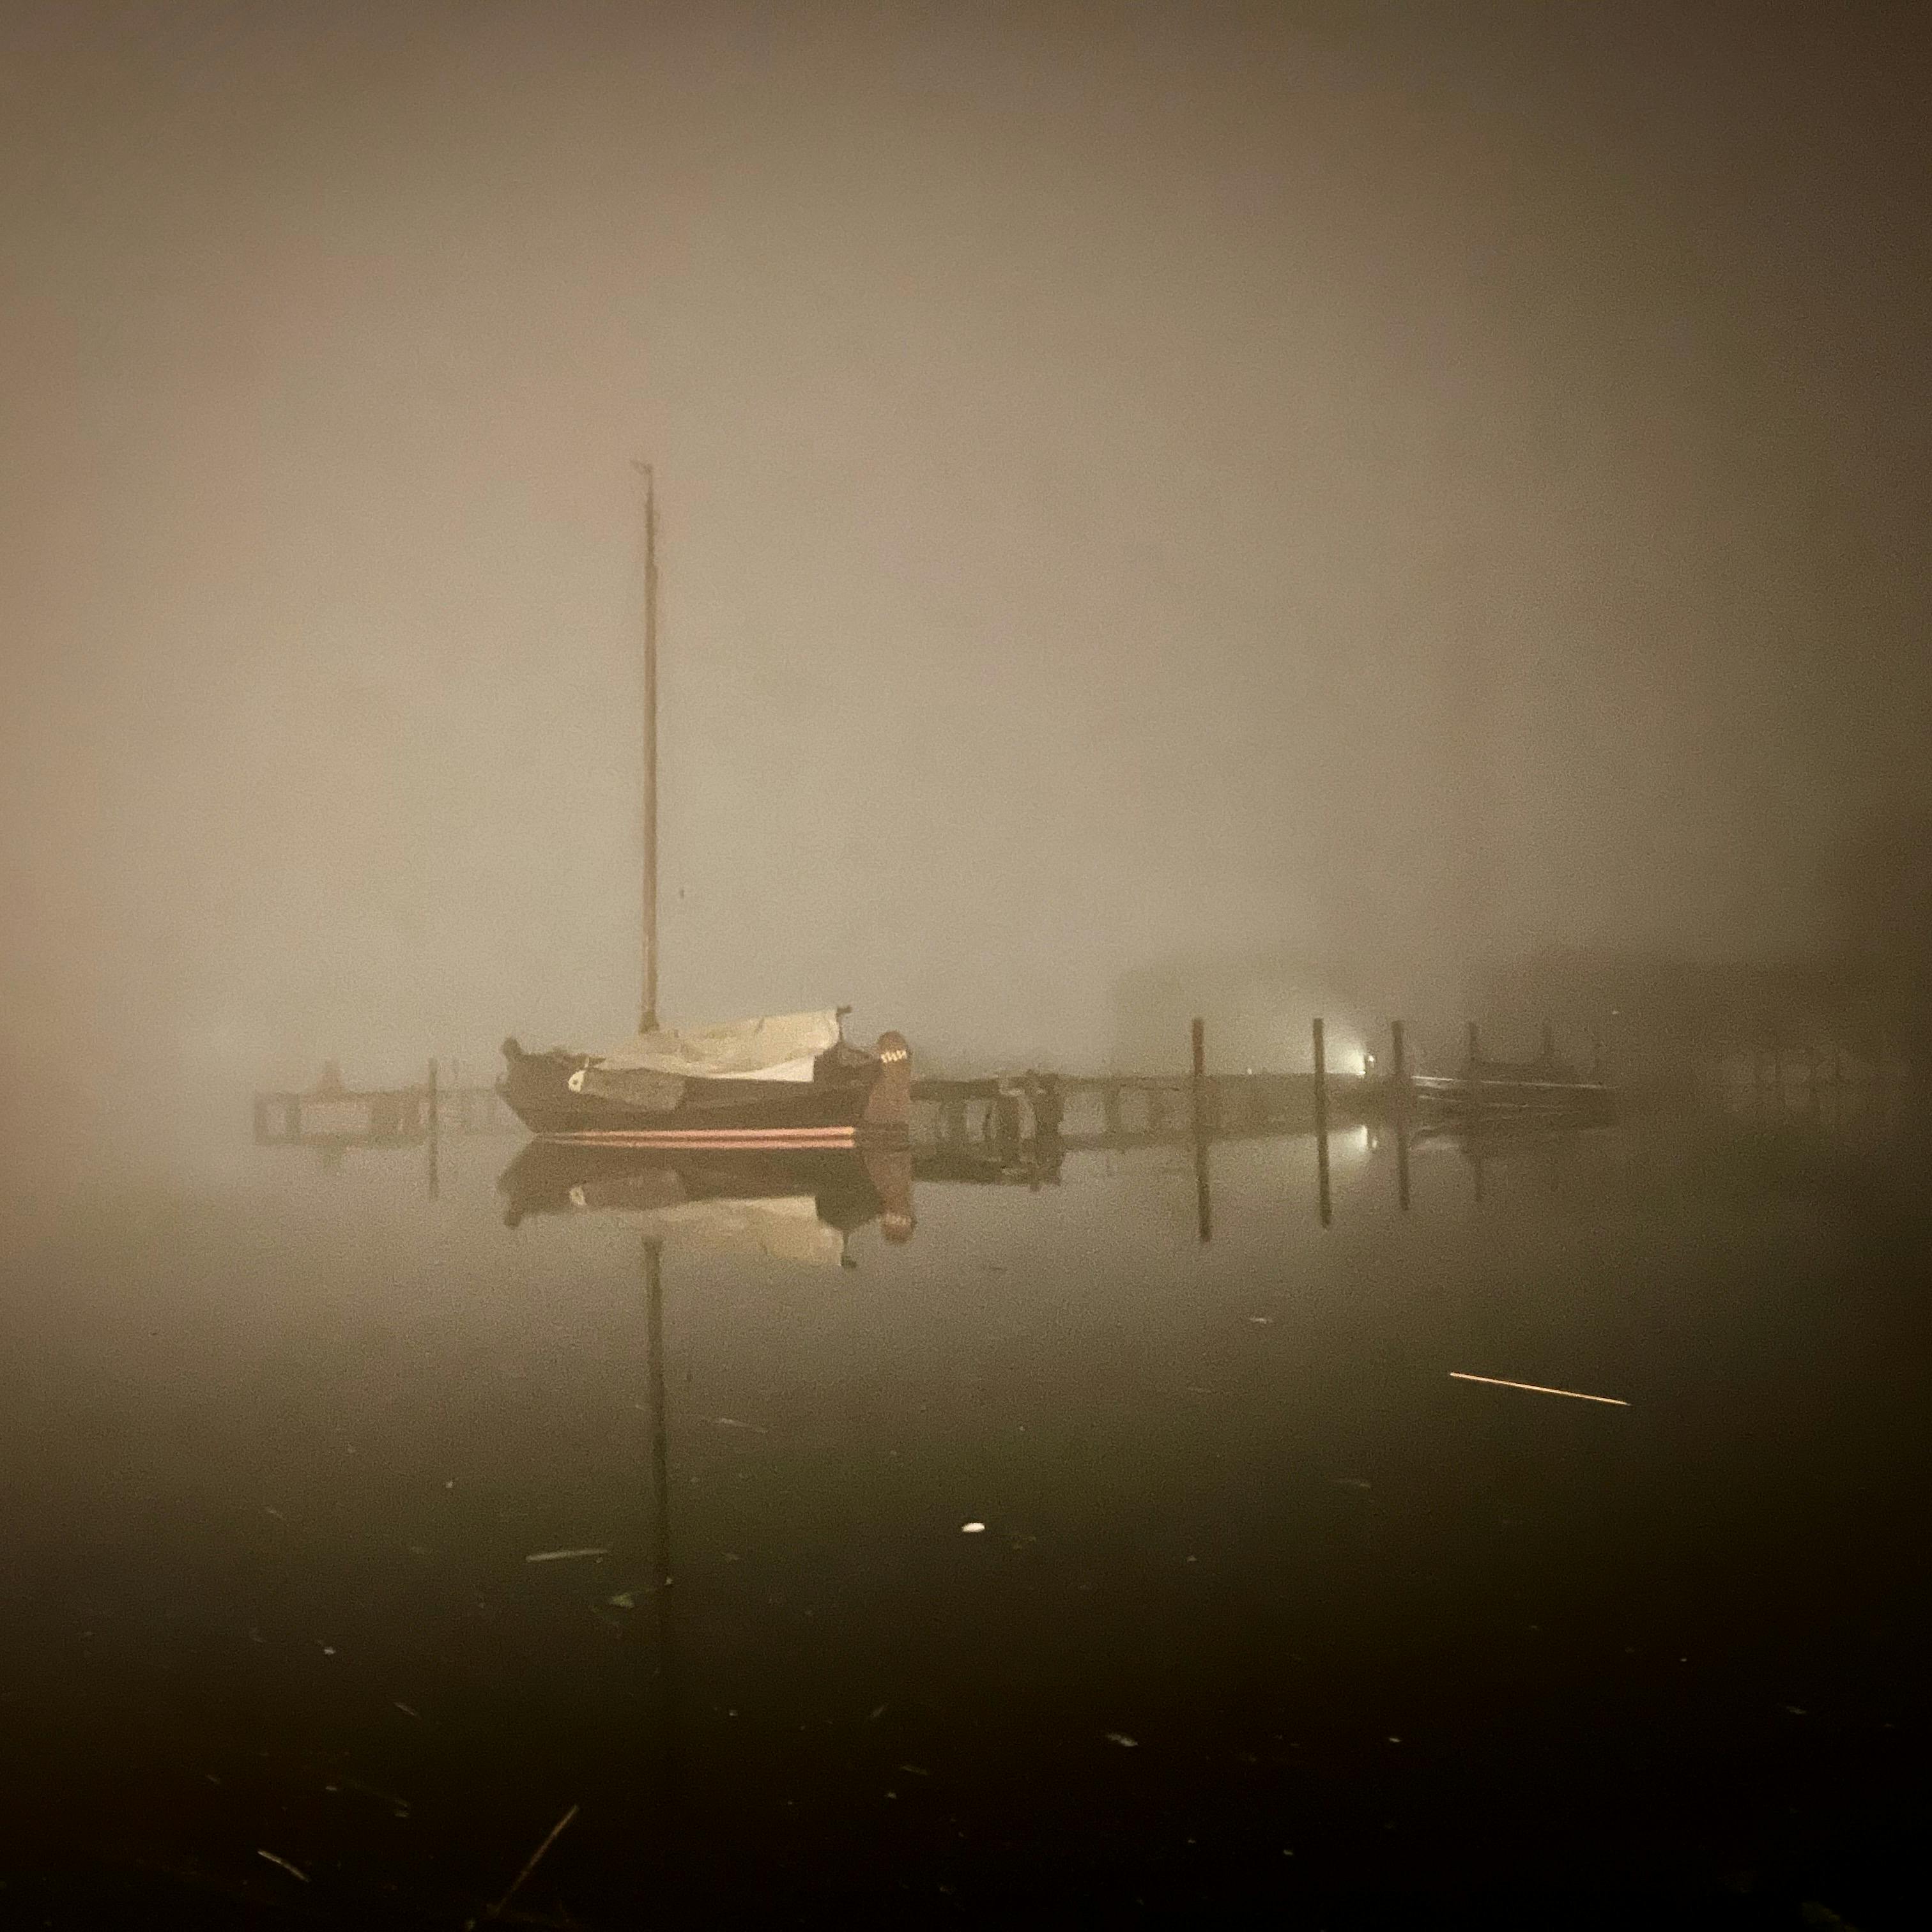 boat in the mist